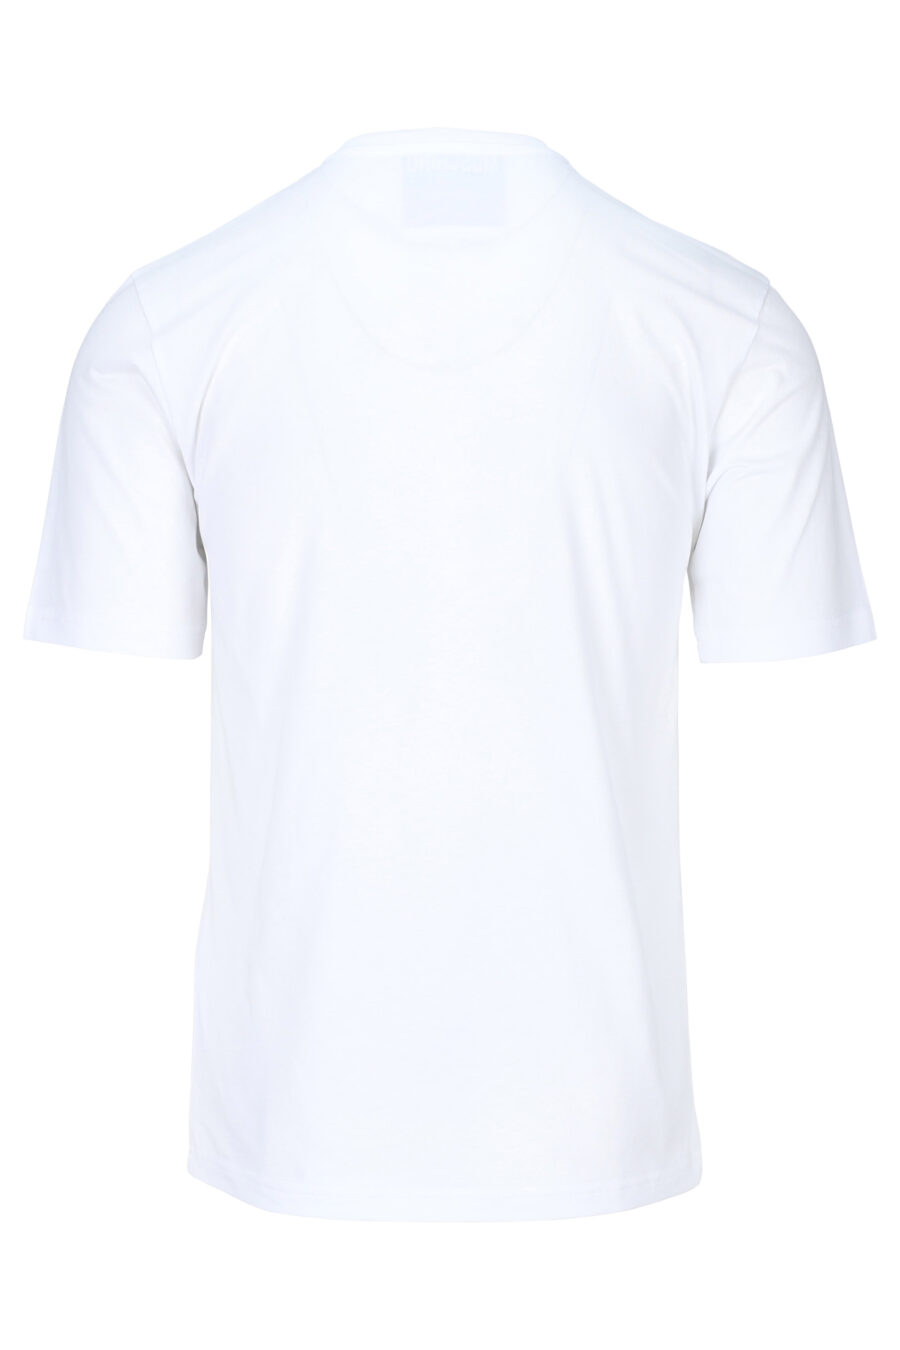 White T-shirt with black worn maxilogue - 889316937954 1